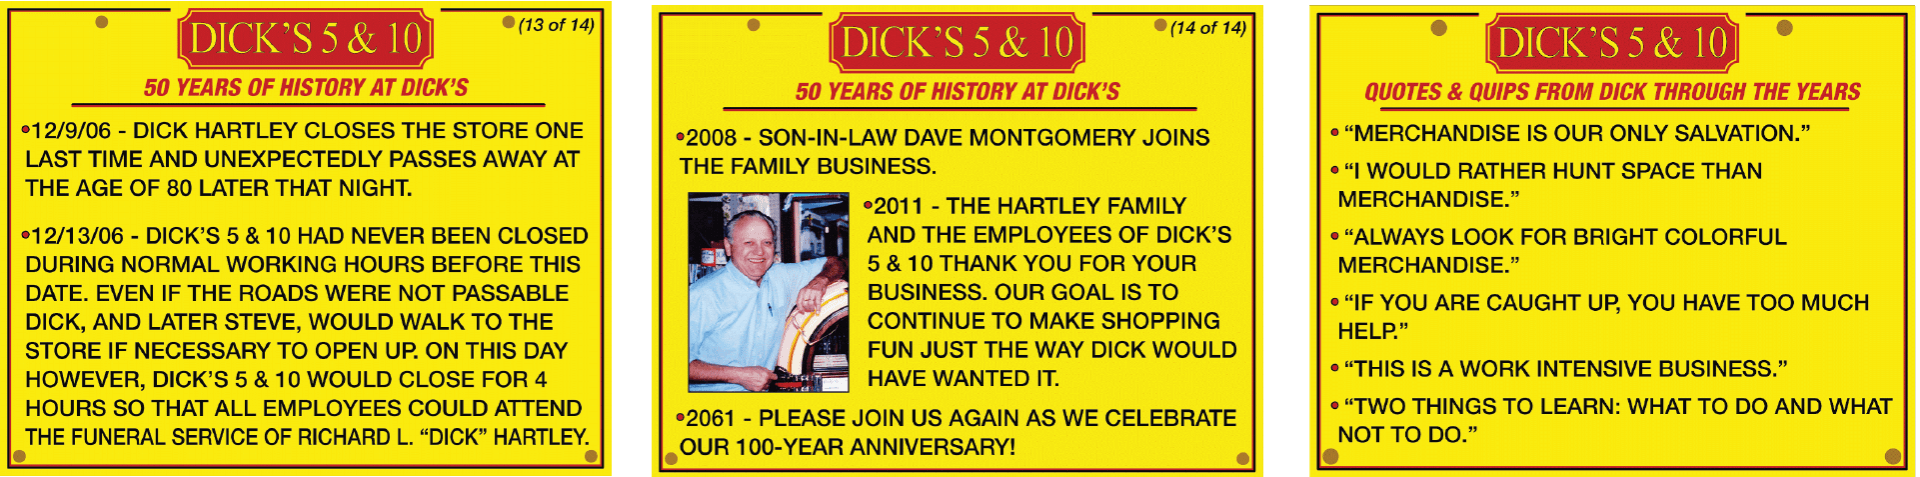 dicks 5 & 10 history 5